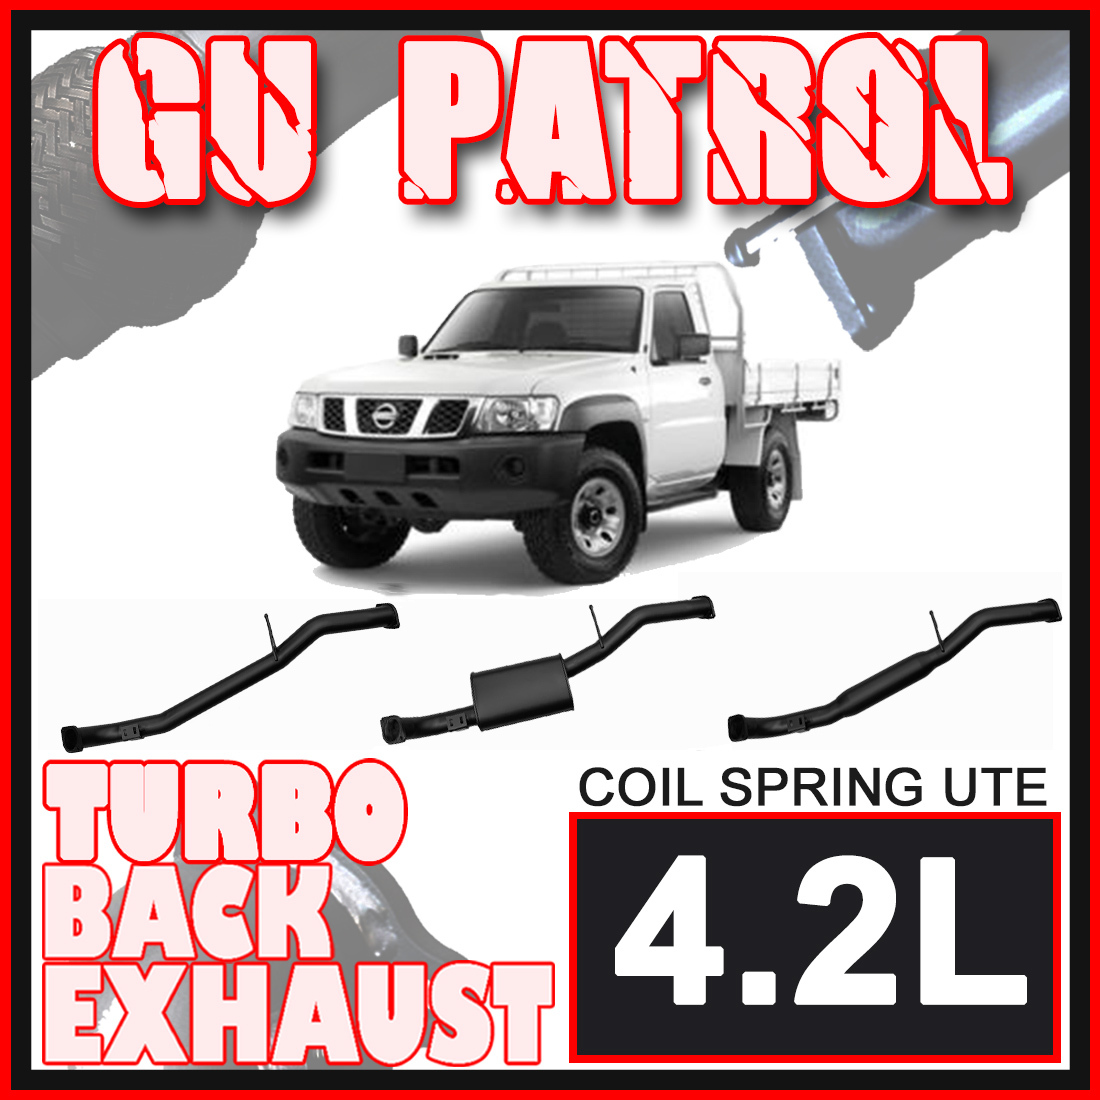 Nissan Patrol GU Coil Spring Ute 4.2L Ignite Exhaust image